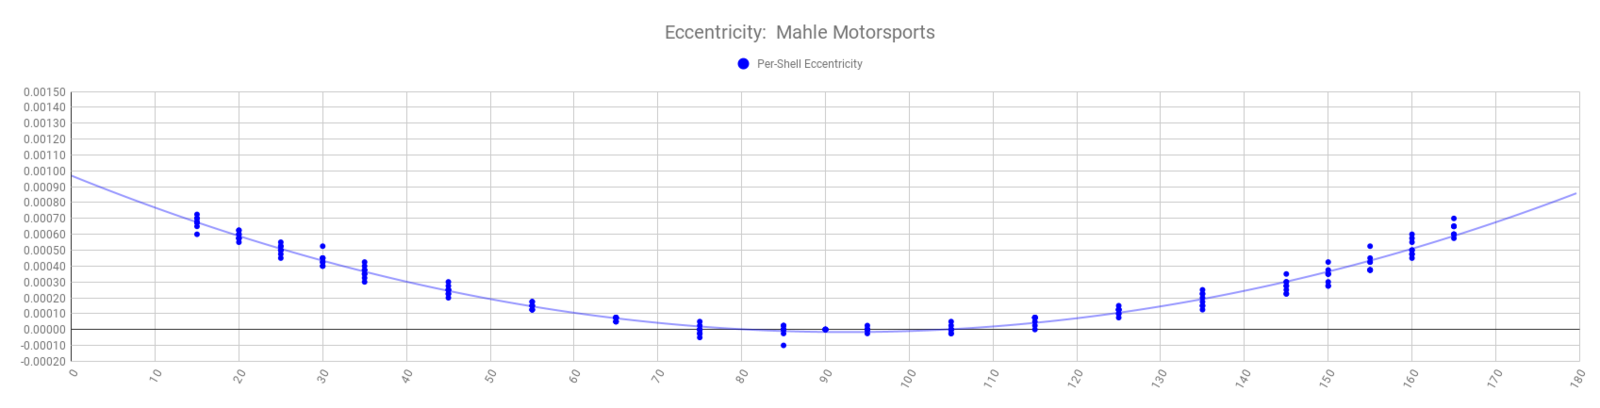 MMS VC-1044 Eccentricity Mahle Motorsports vs BE Bearings.png